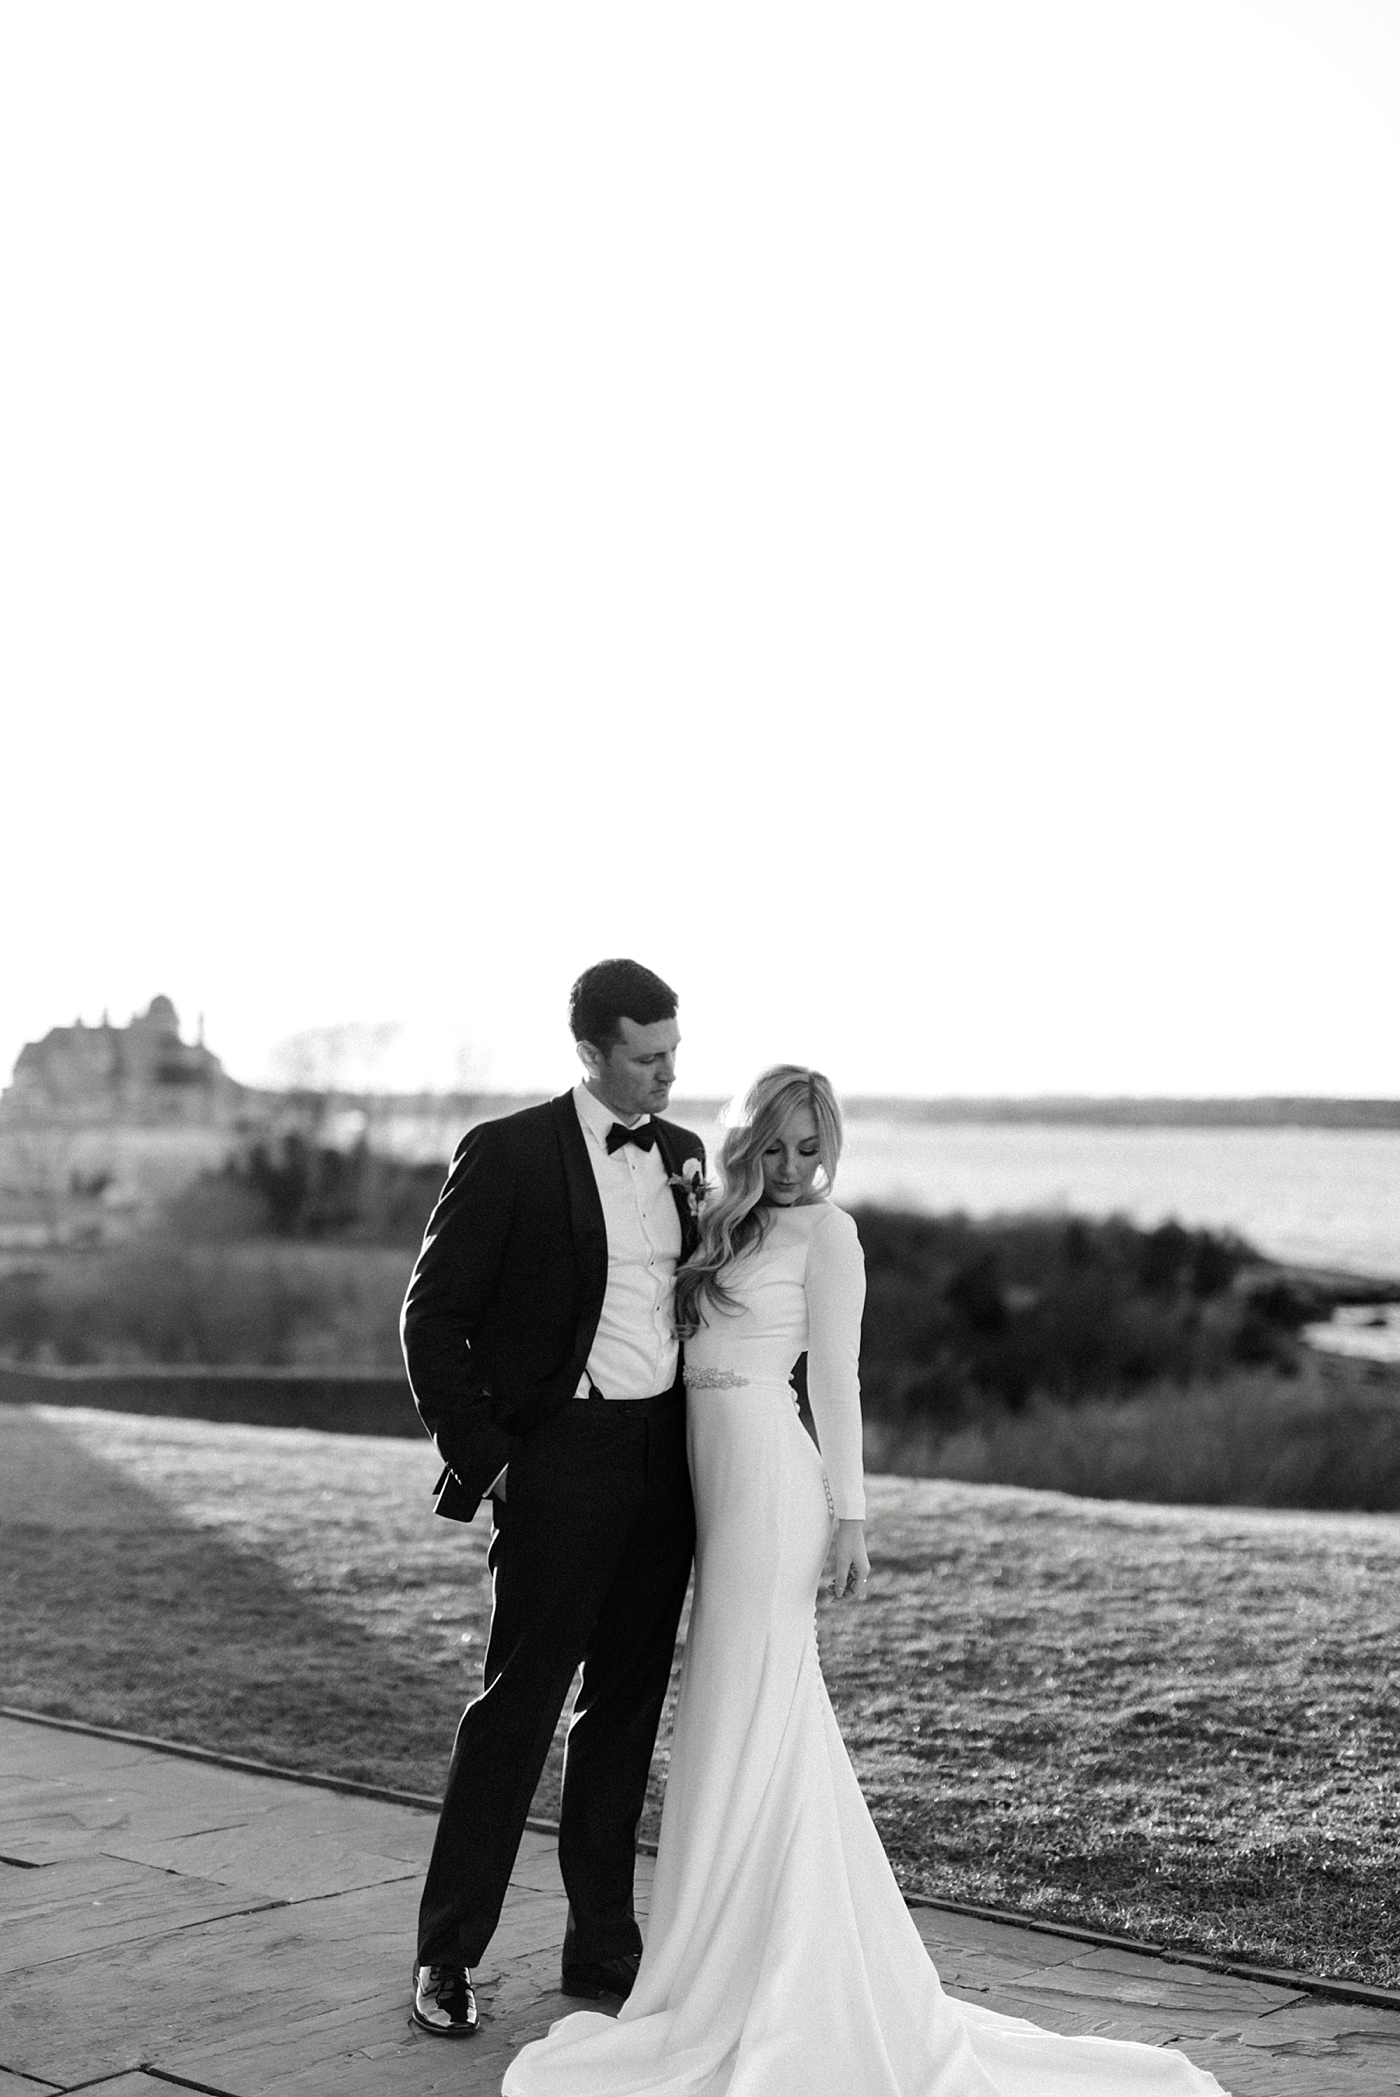 Classic Winter Wedding at Oceancliff Hotel & Resort in Newport, RI by Boston Wedding Photographer Annmarie Swift